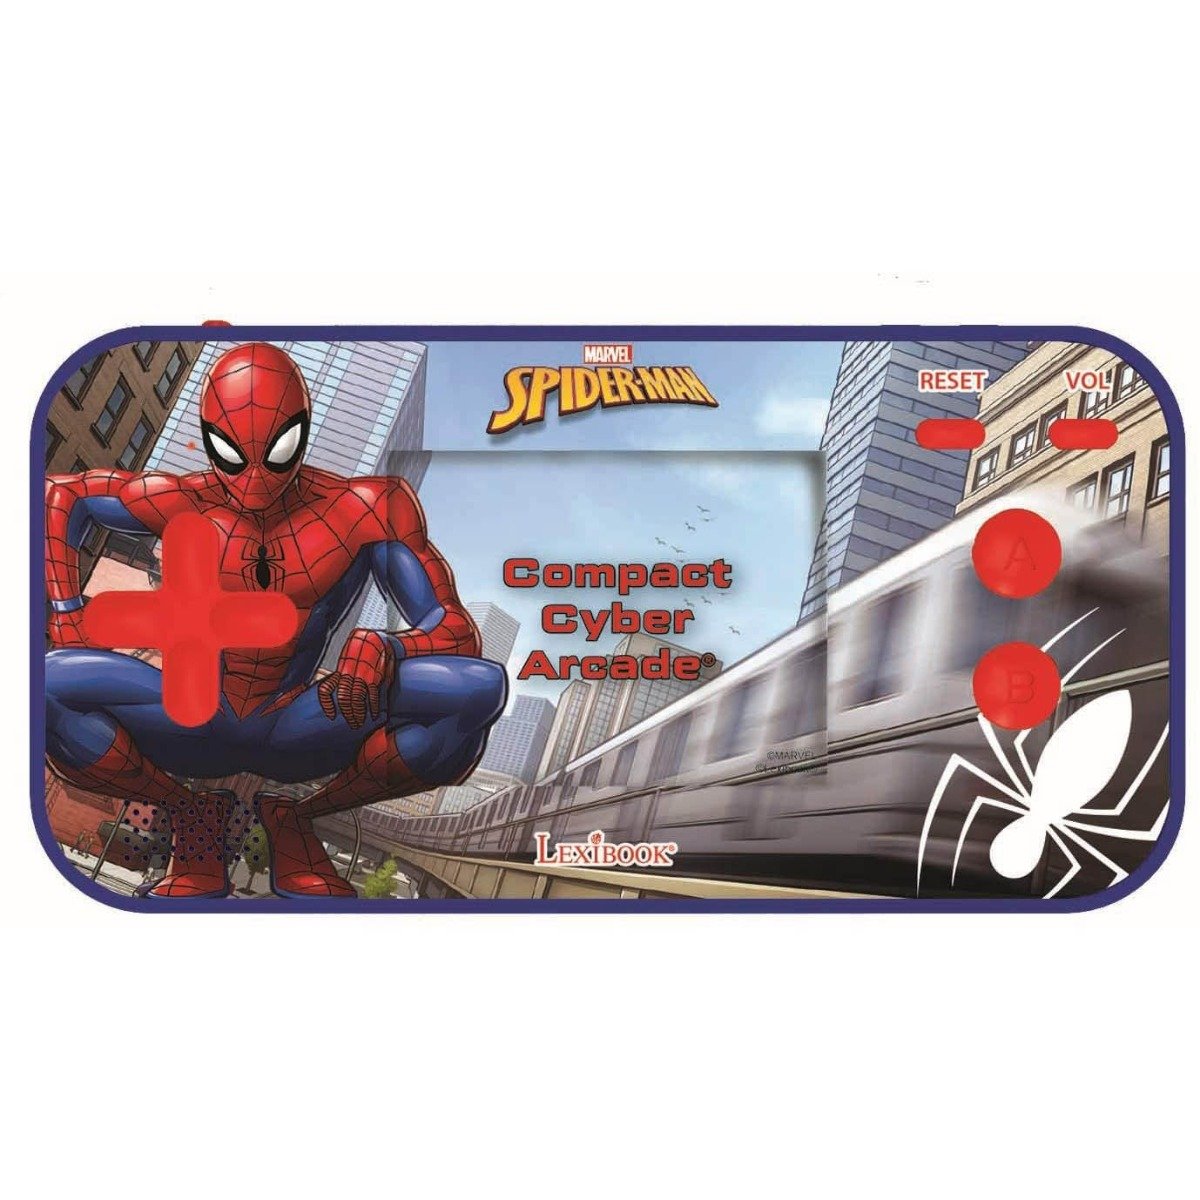 Consola portabila Cyber Arcade Lexibook, Spiderman, 150 jocuri